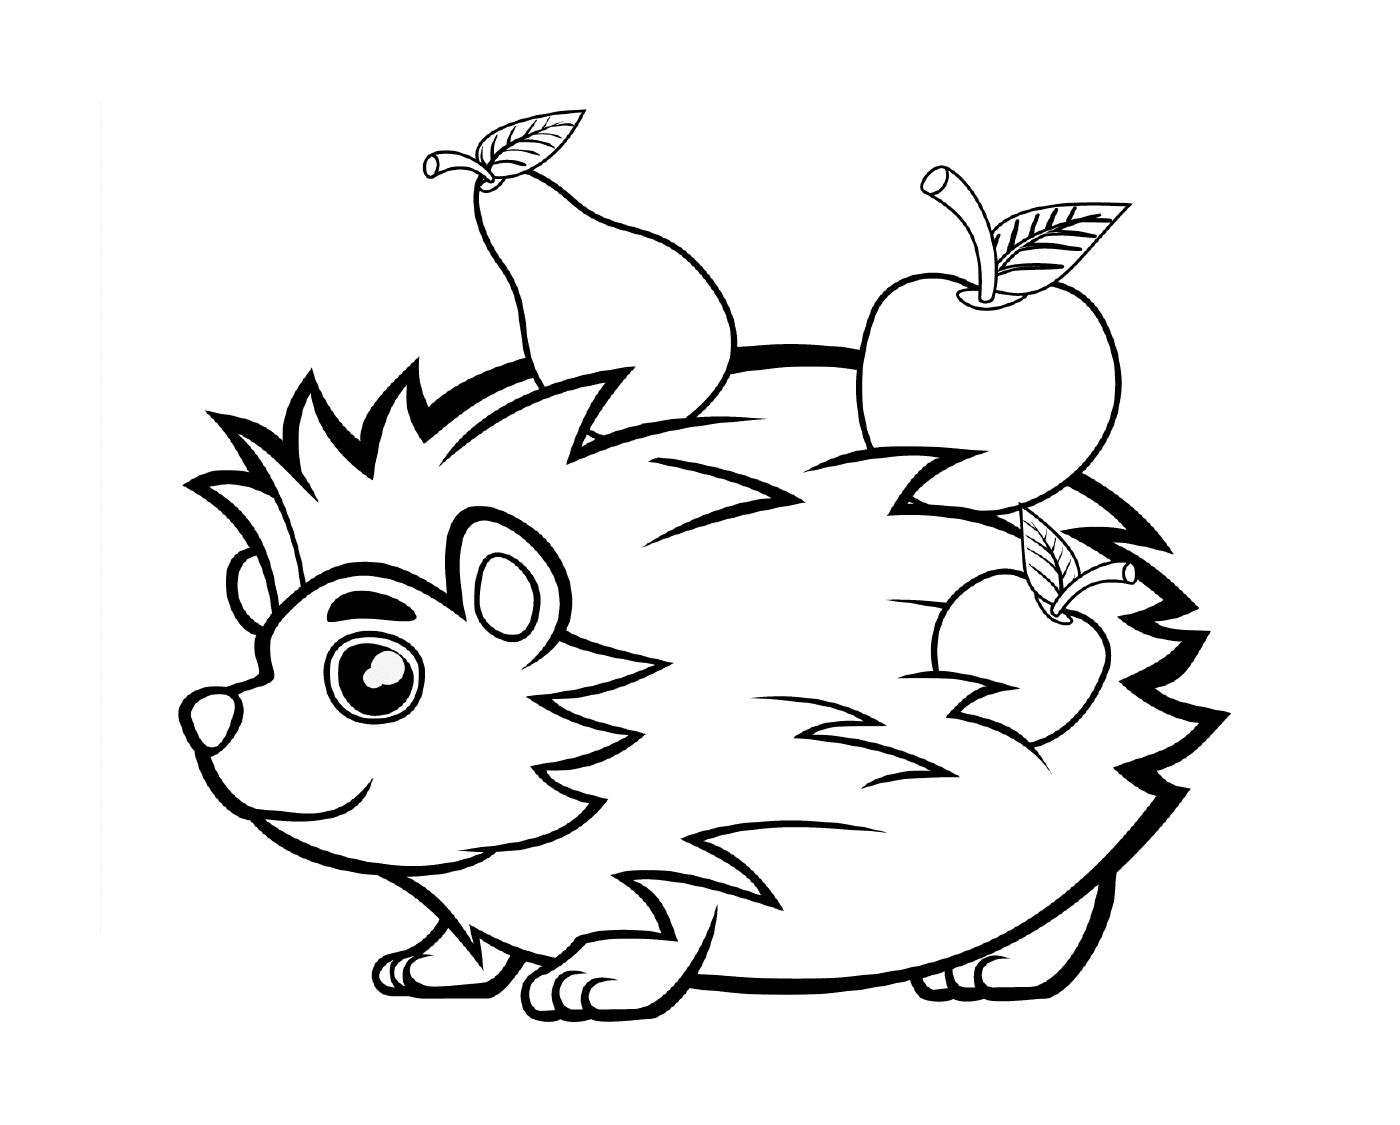  A hedgehog with fruit 